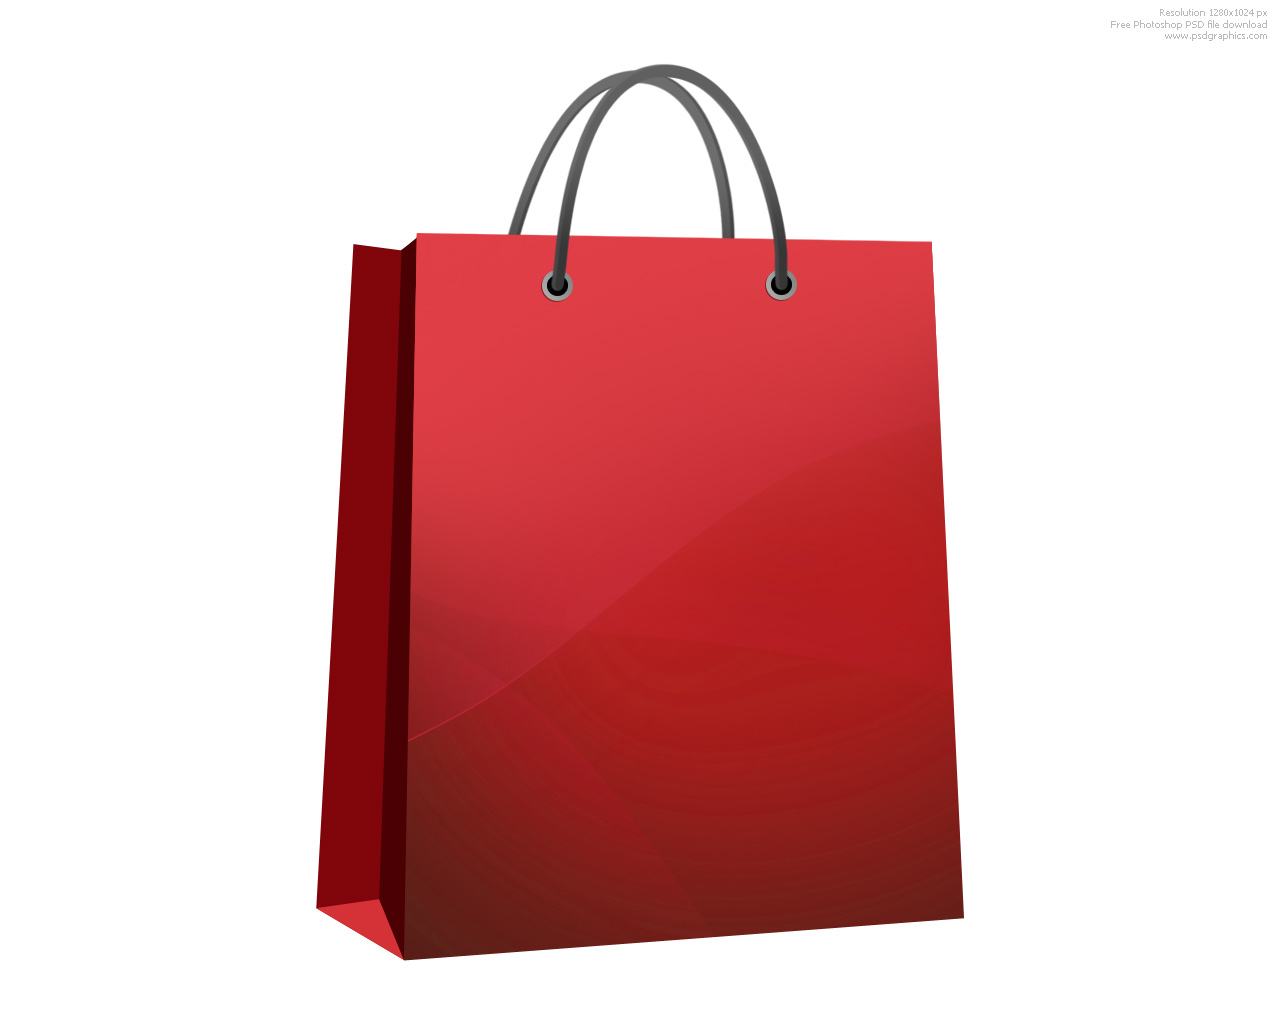 Free shopping bag Clipart